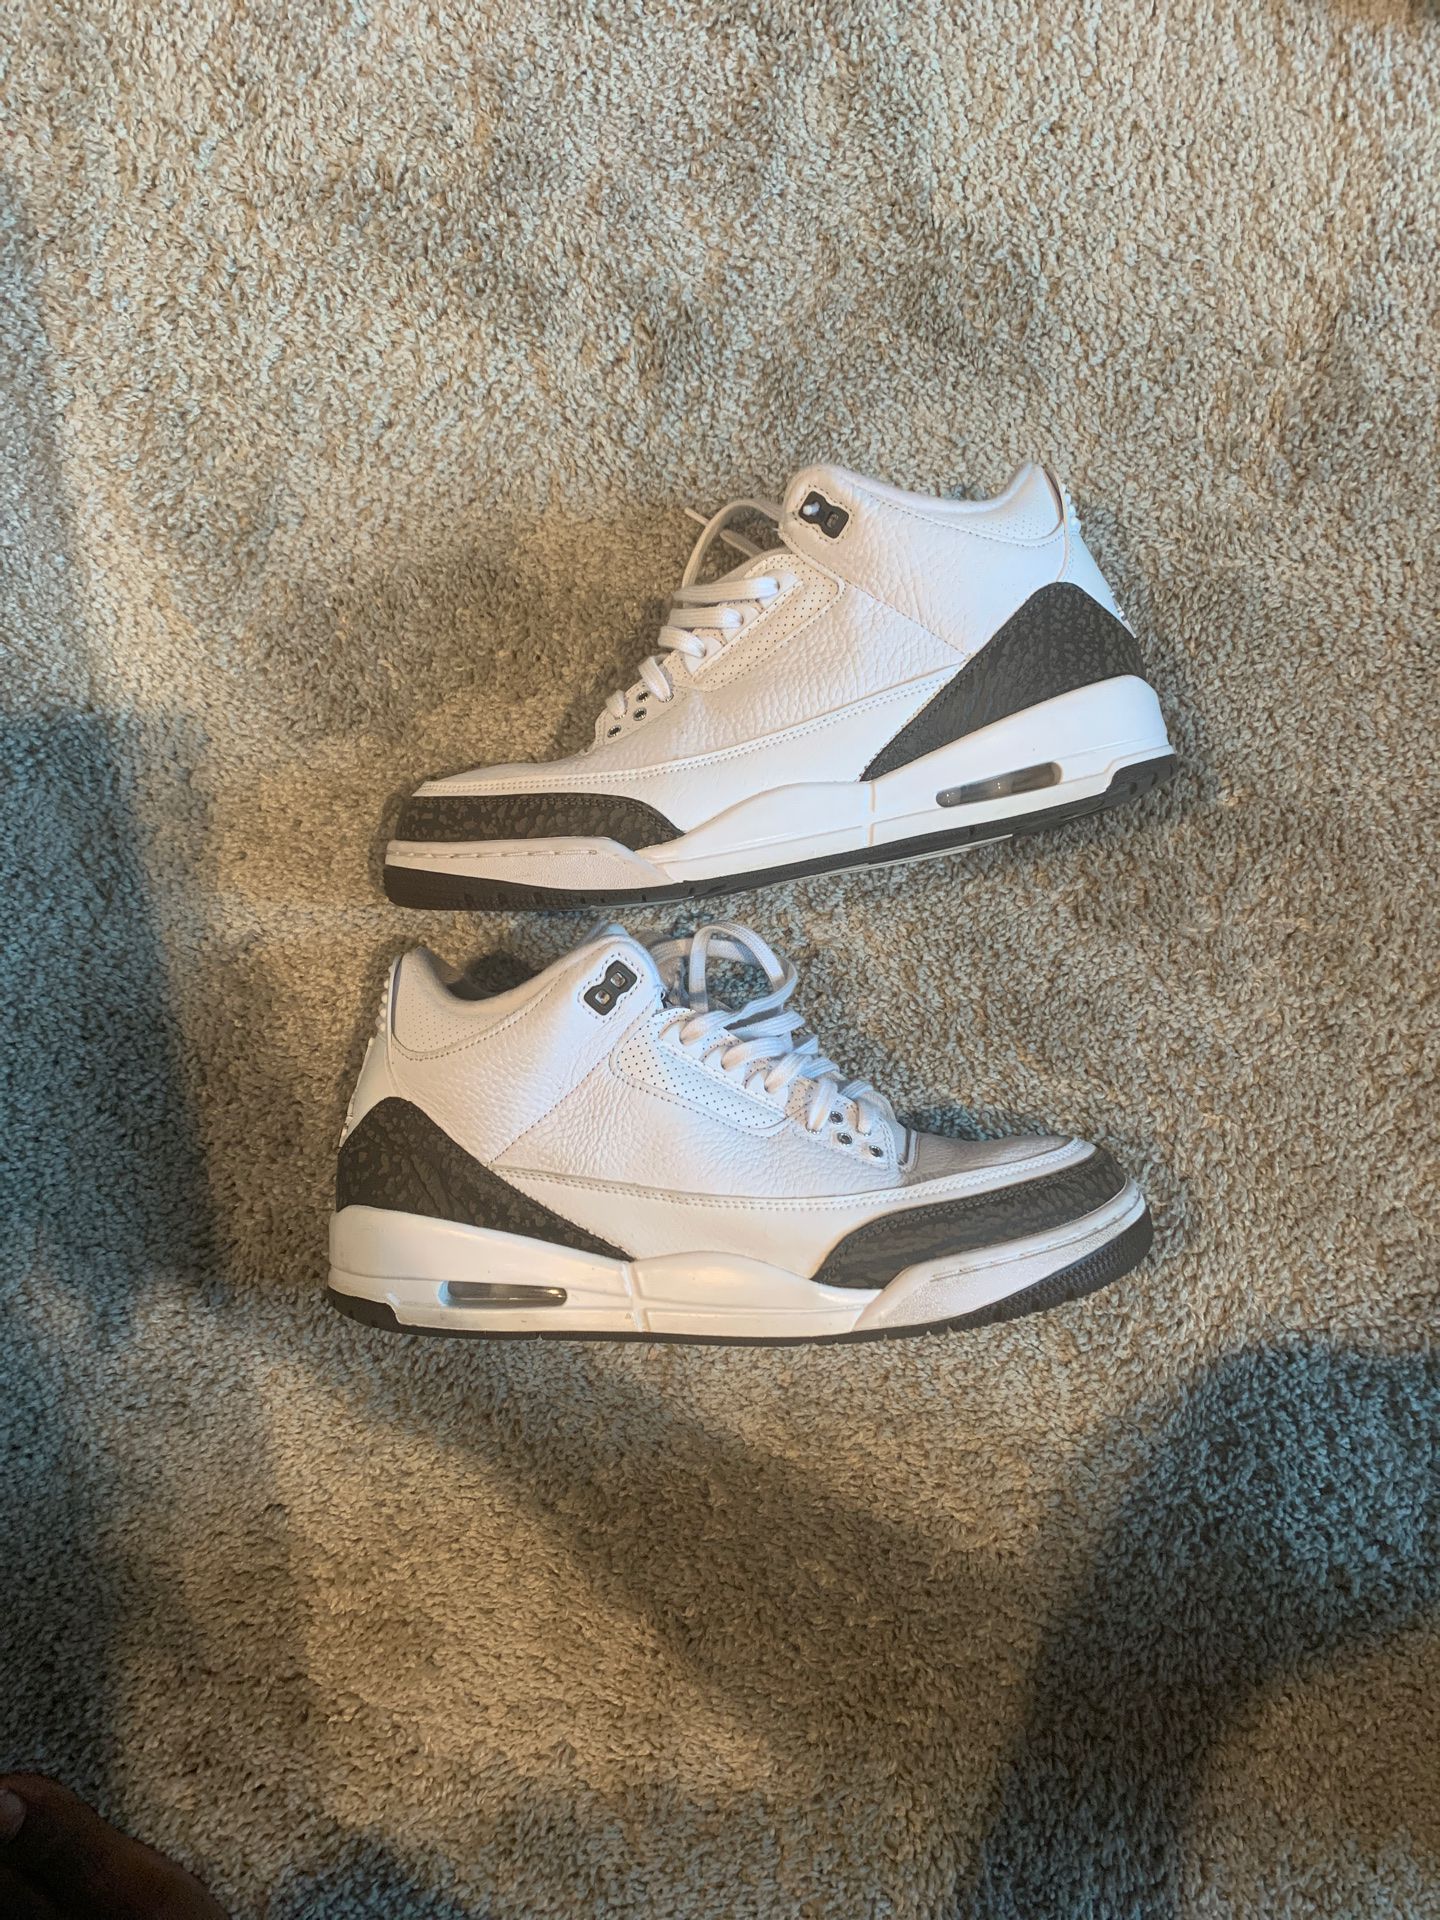 Nike Jordan Retro 3 Mocha size 11